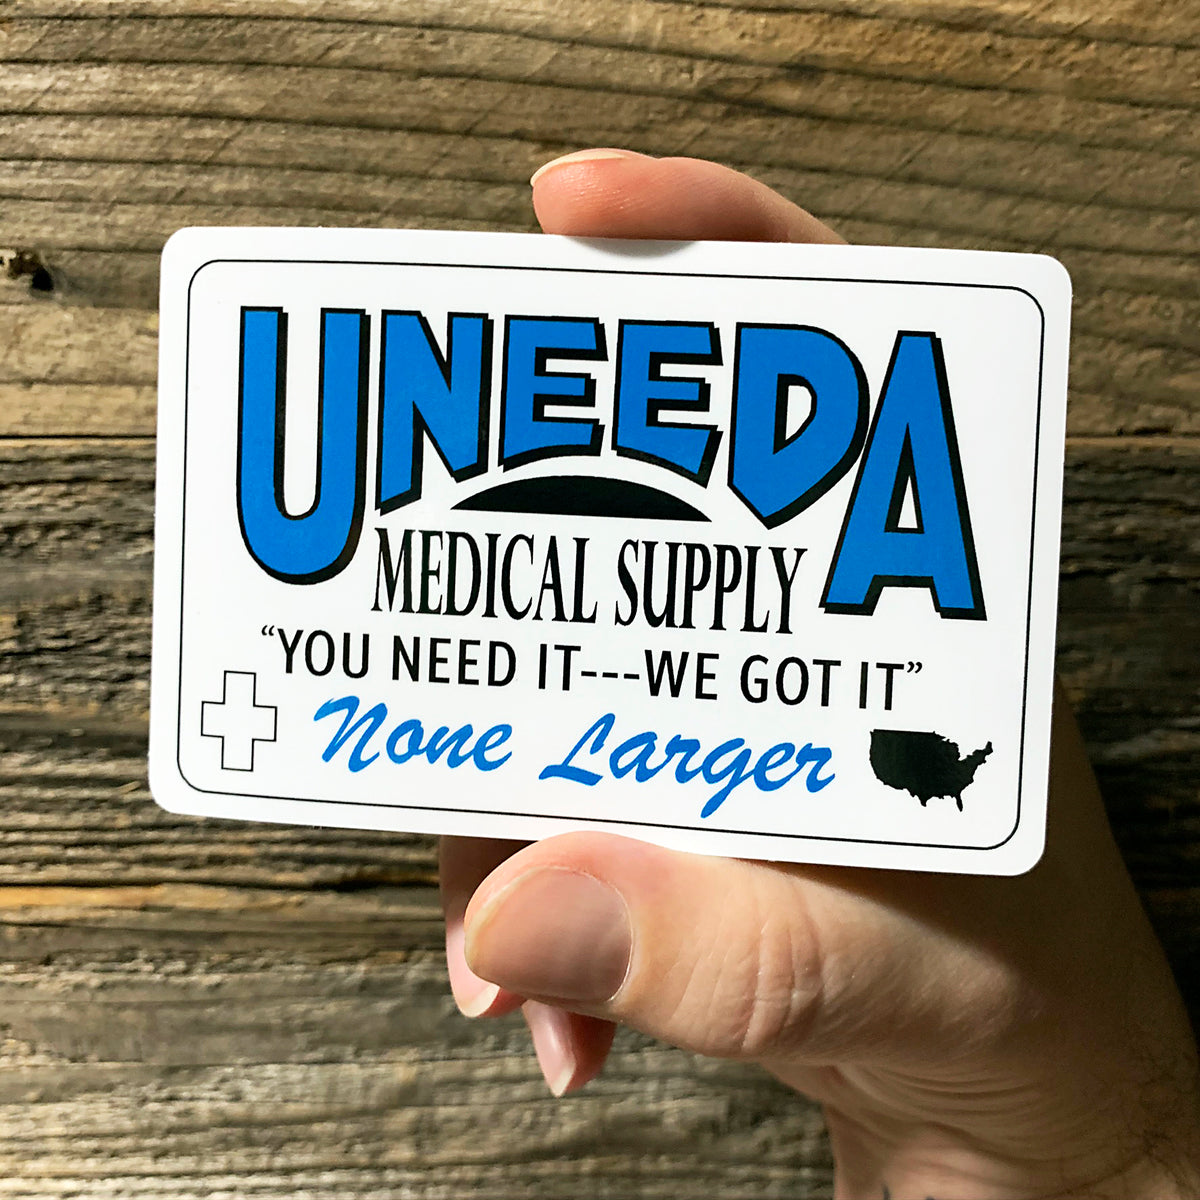 Uneeda Medical Supply Vinyl Sticker!